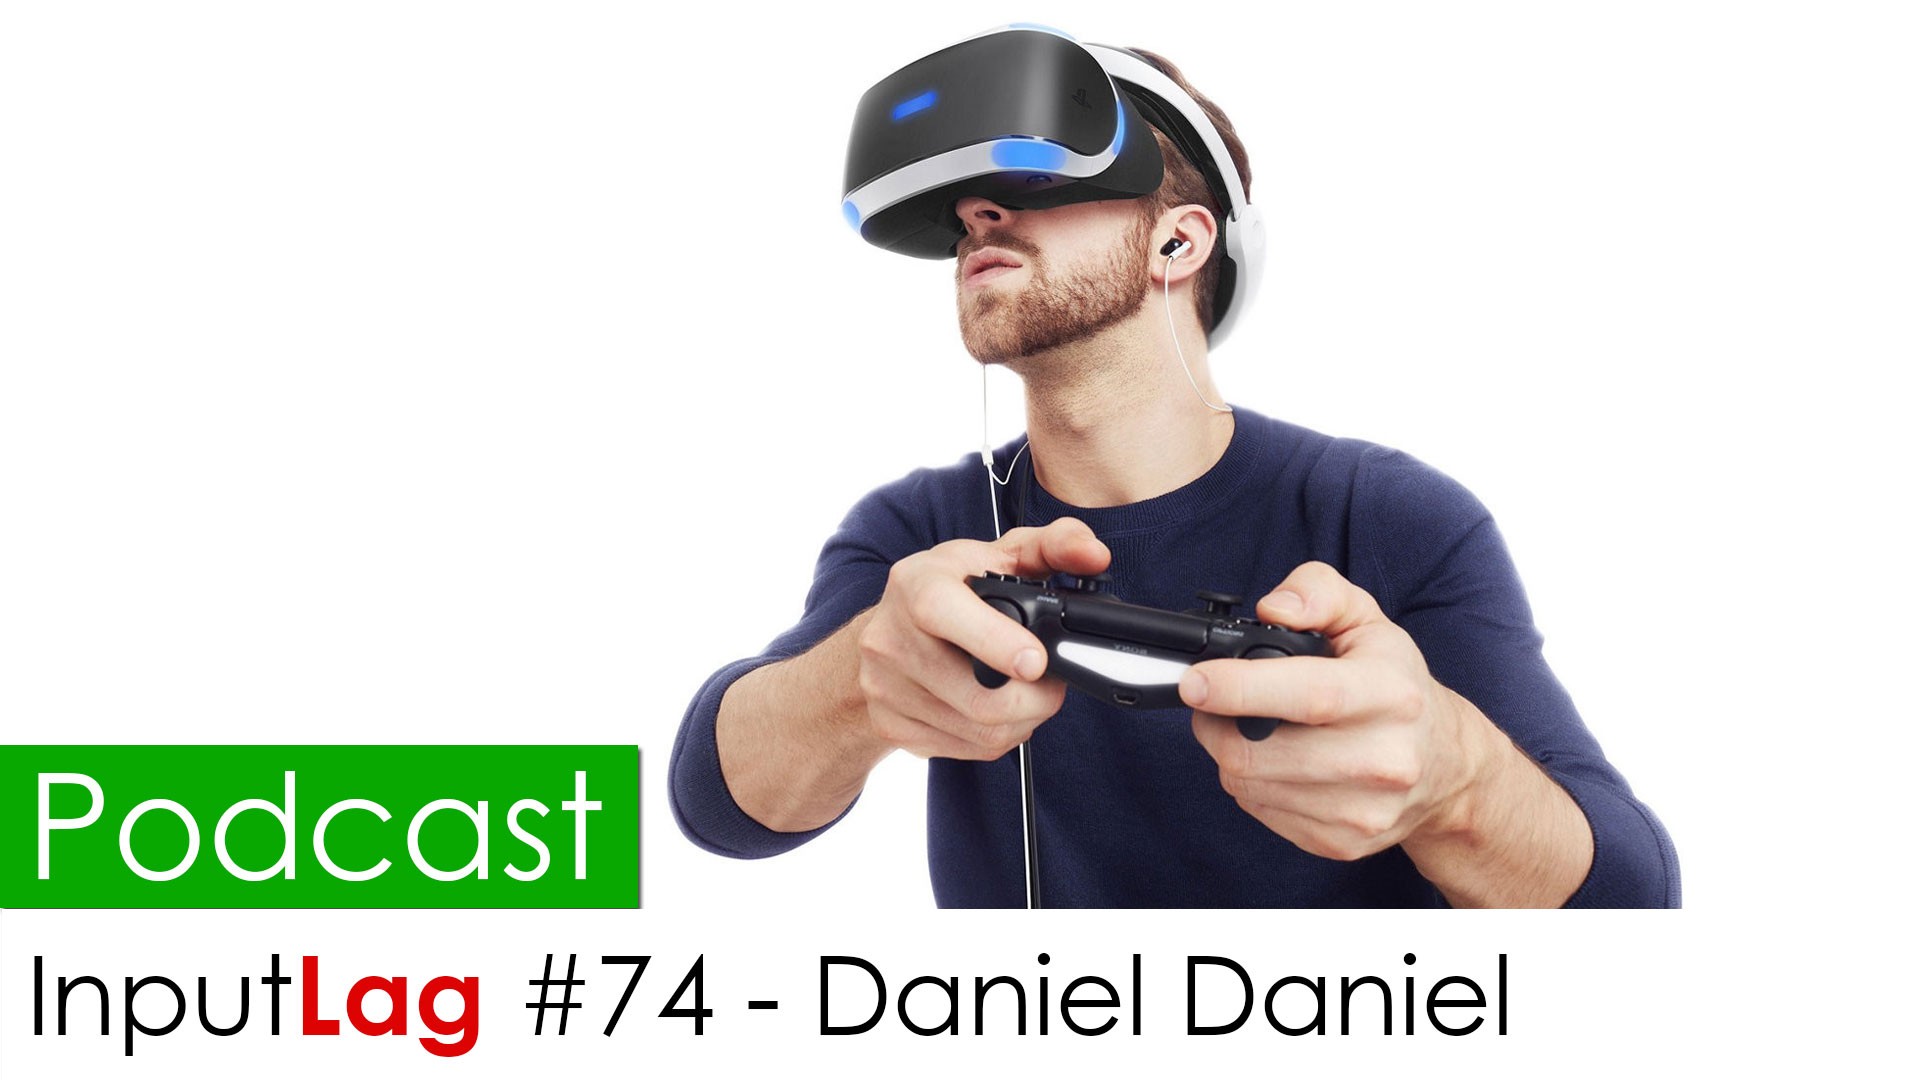 Podcast InputLag #74 - Daniel Daniel